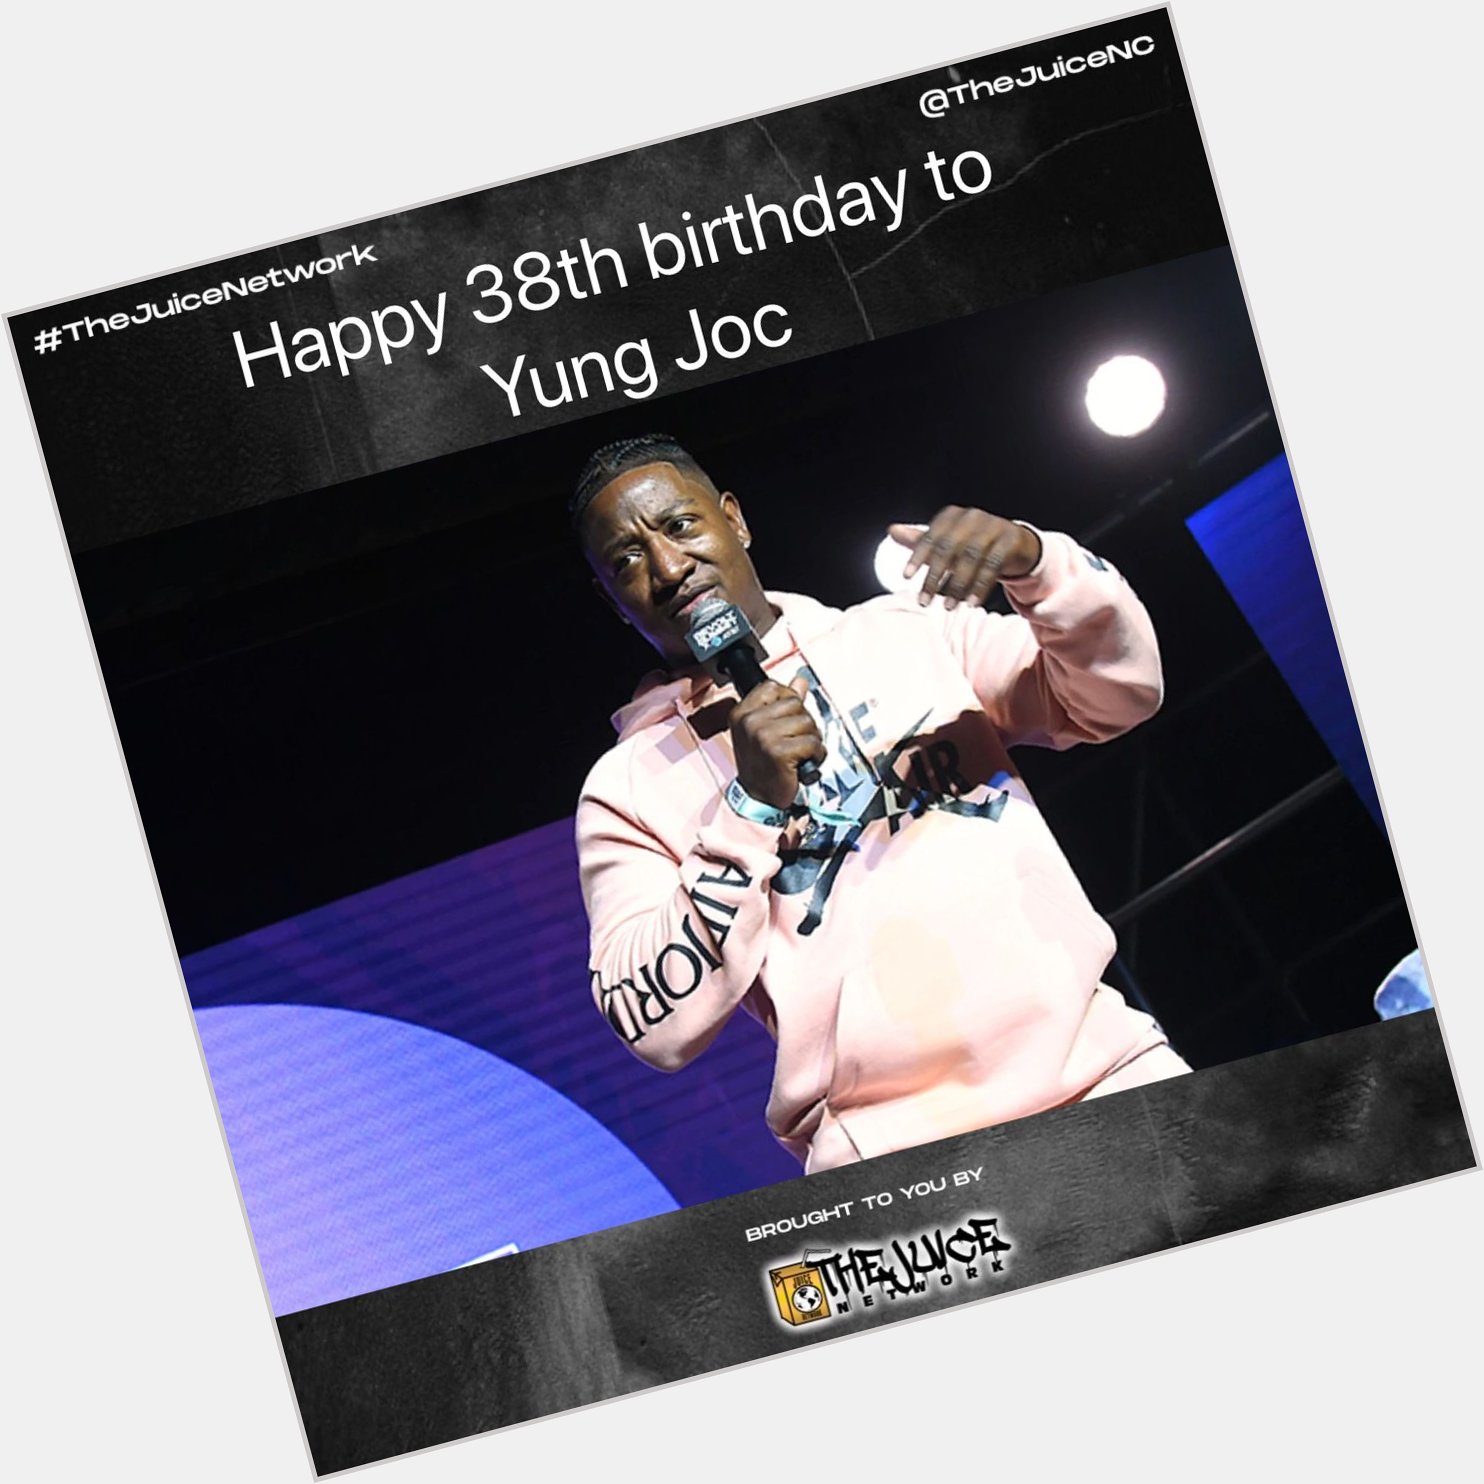 Happy 38th birthday to Yung Joc!    